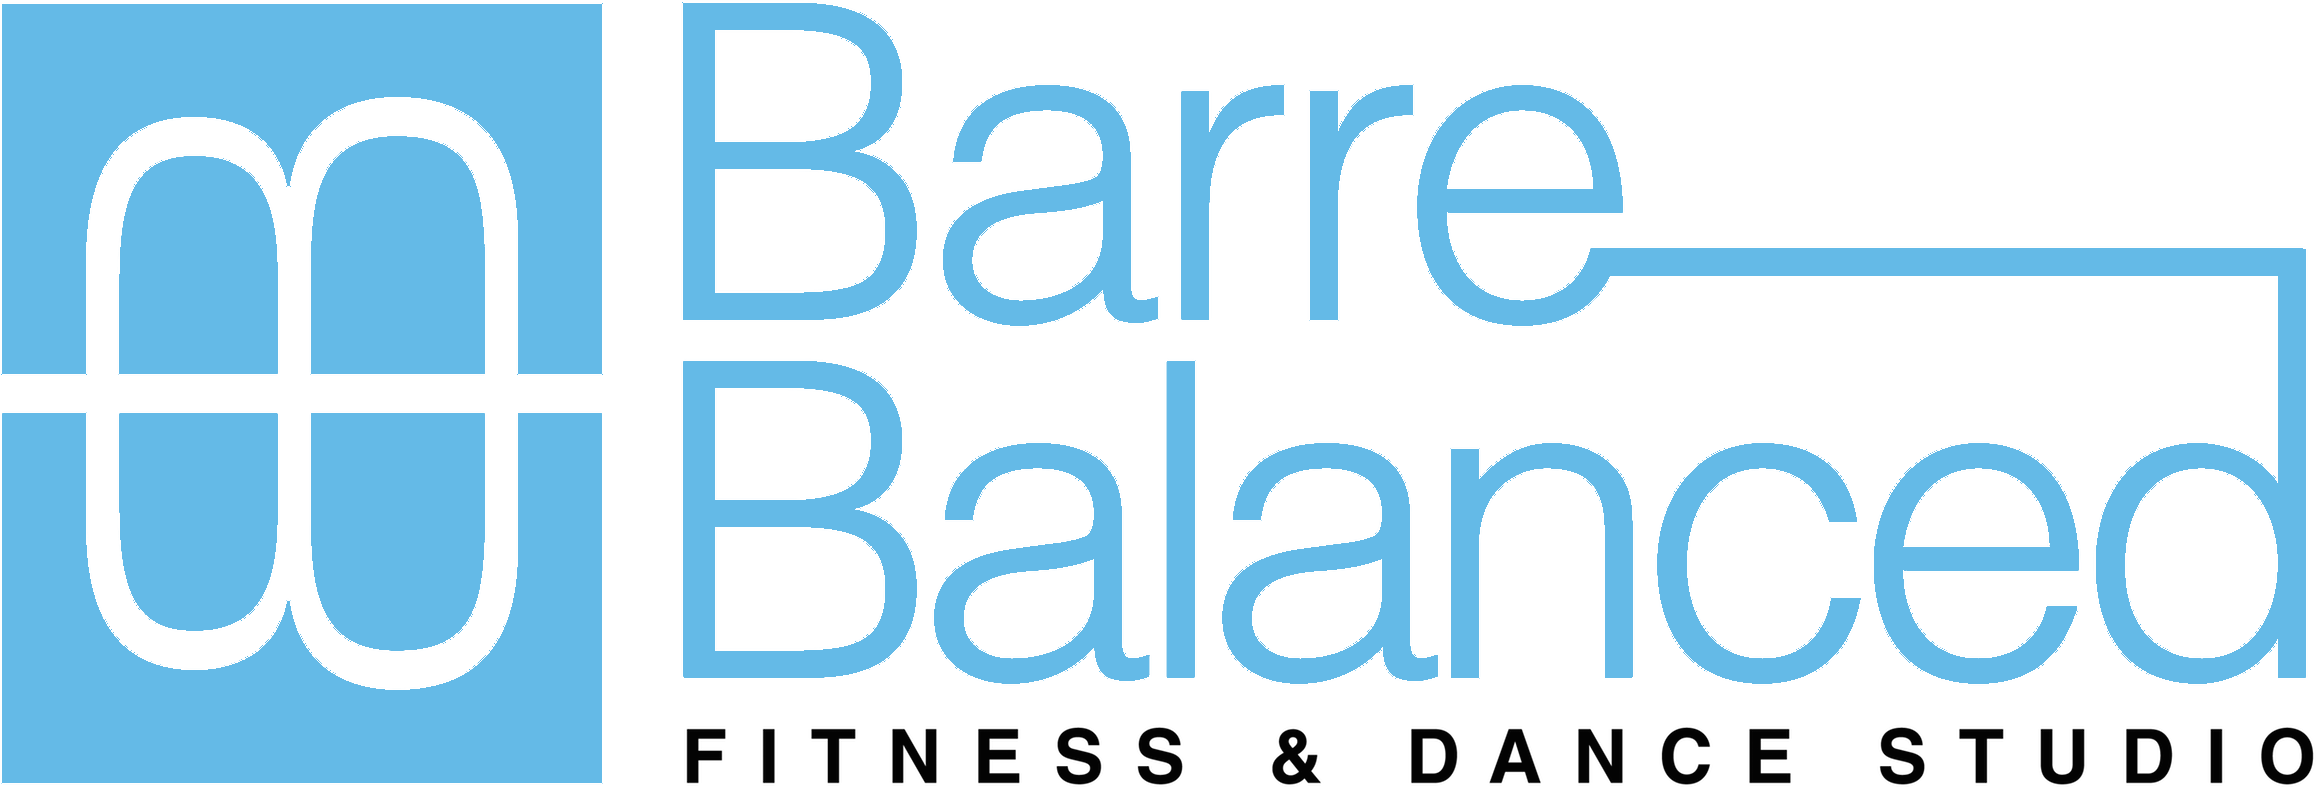 Barre Balanced